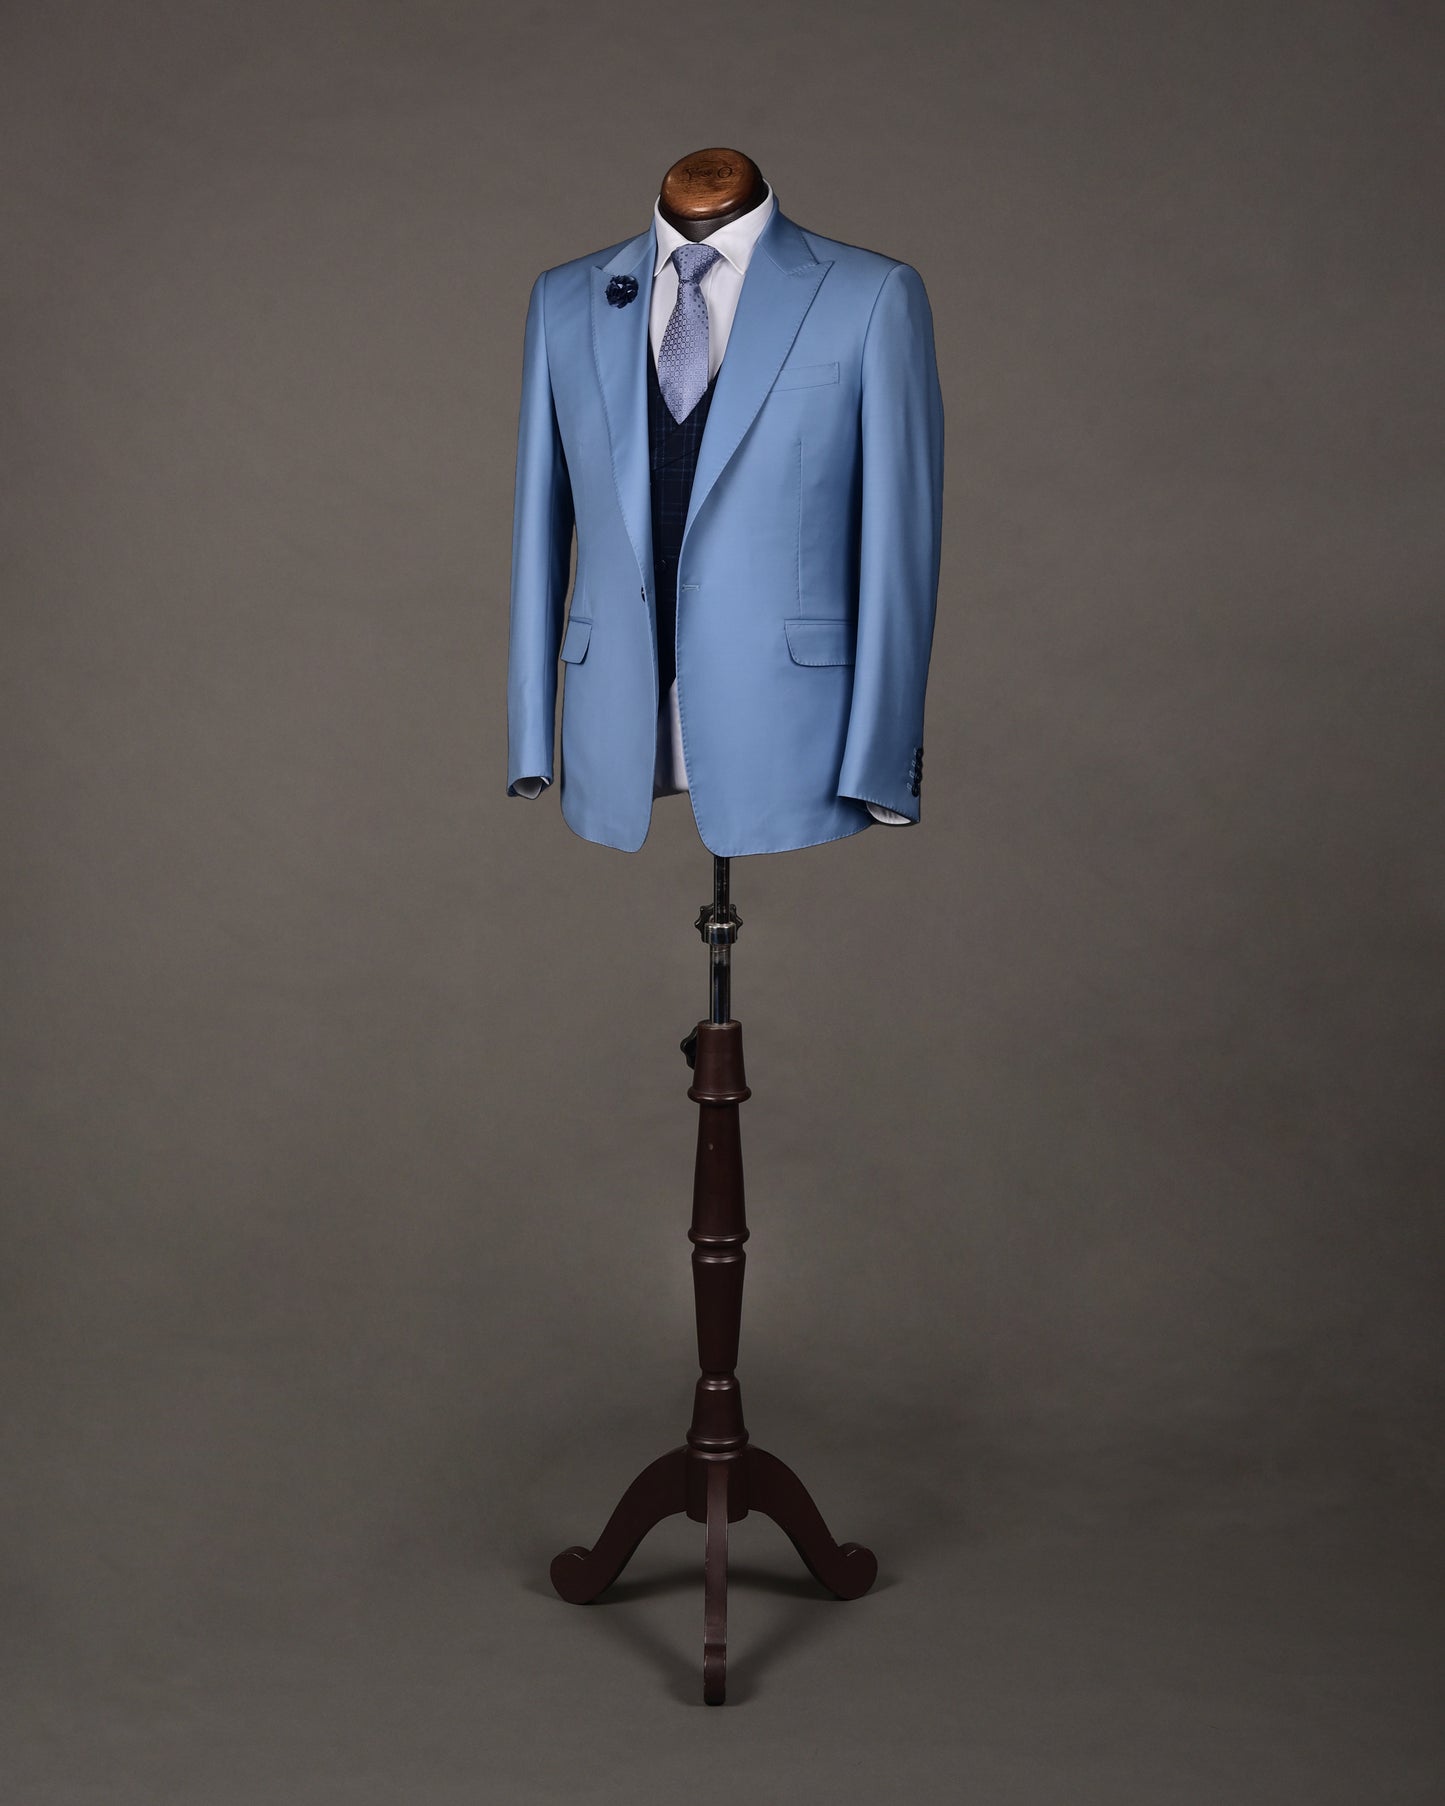 Aggregate more than 137 light blue suit